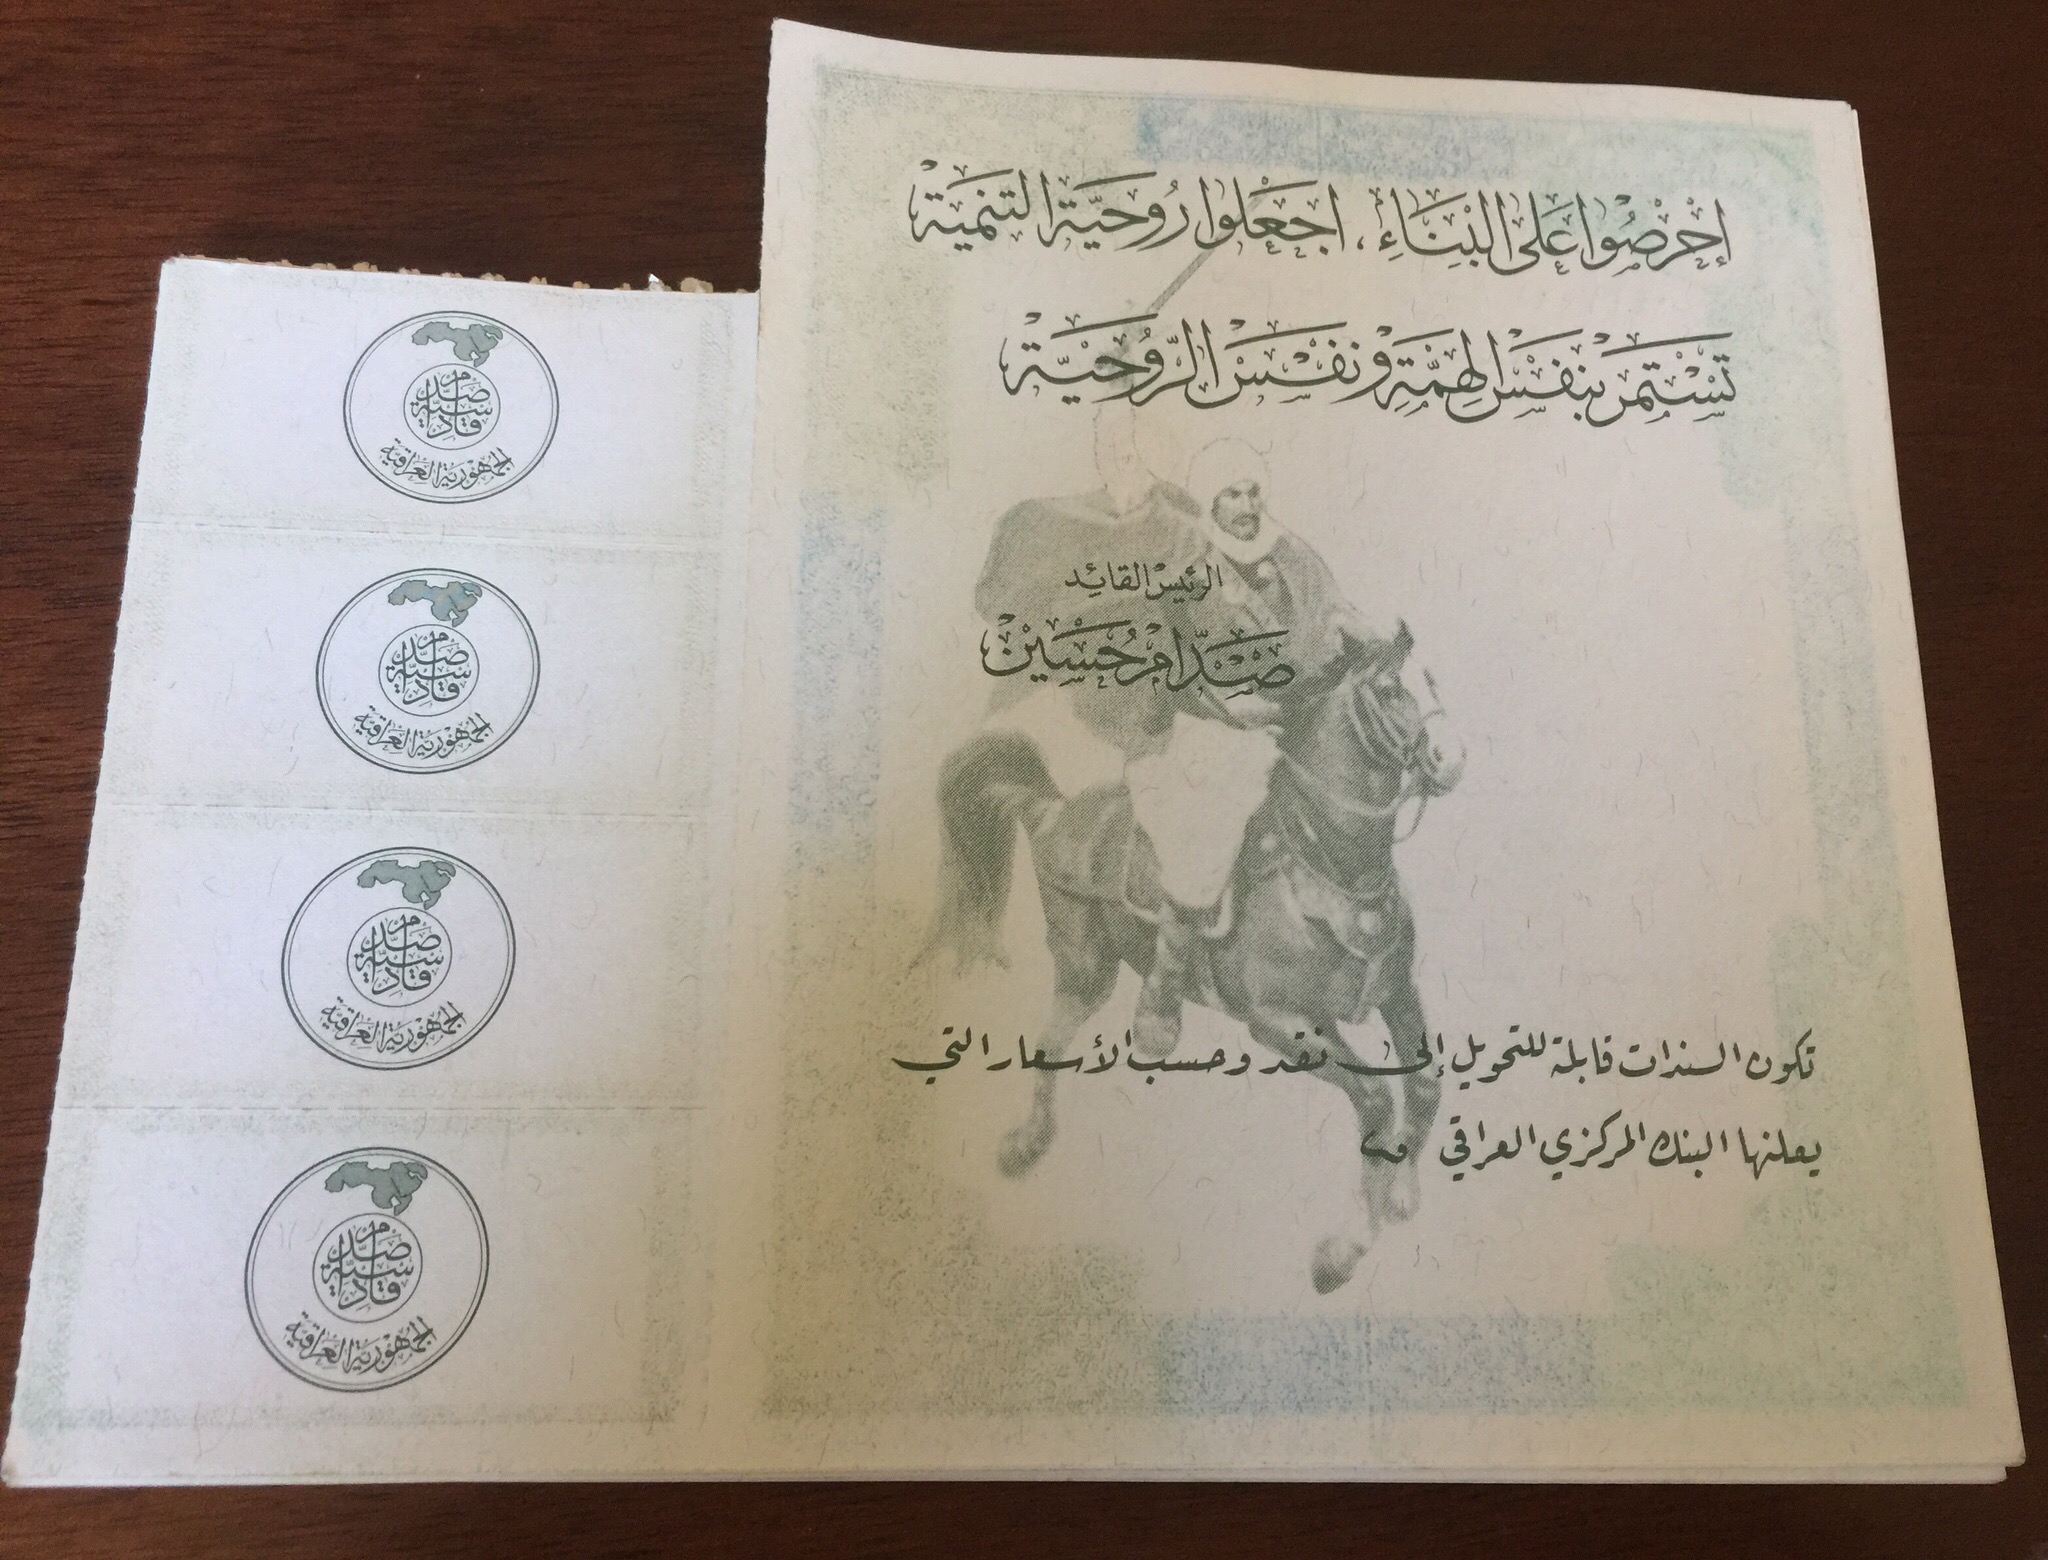 1987 Iraq 100 Dinar Gulf War Bond Coupons Shares Certificates Saddam Hussein